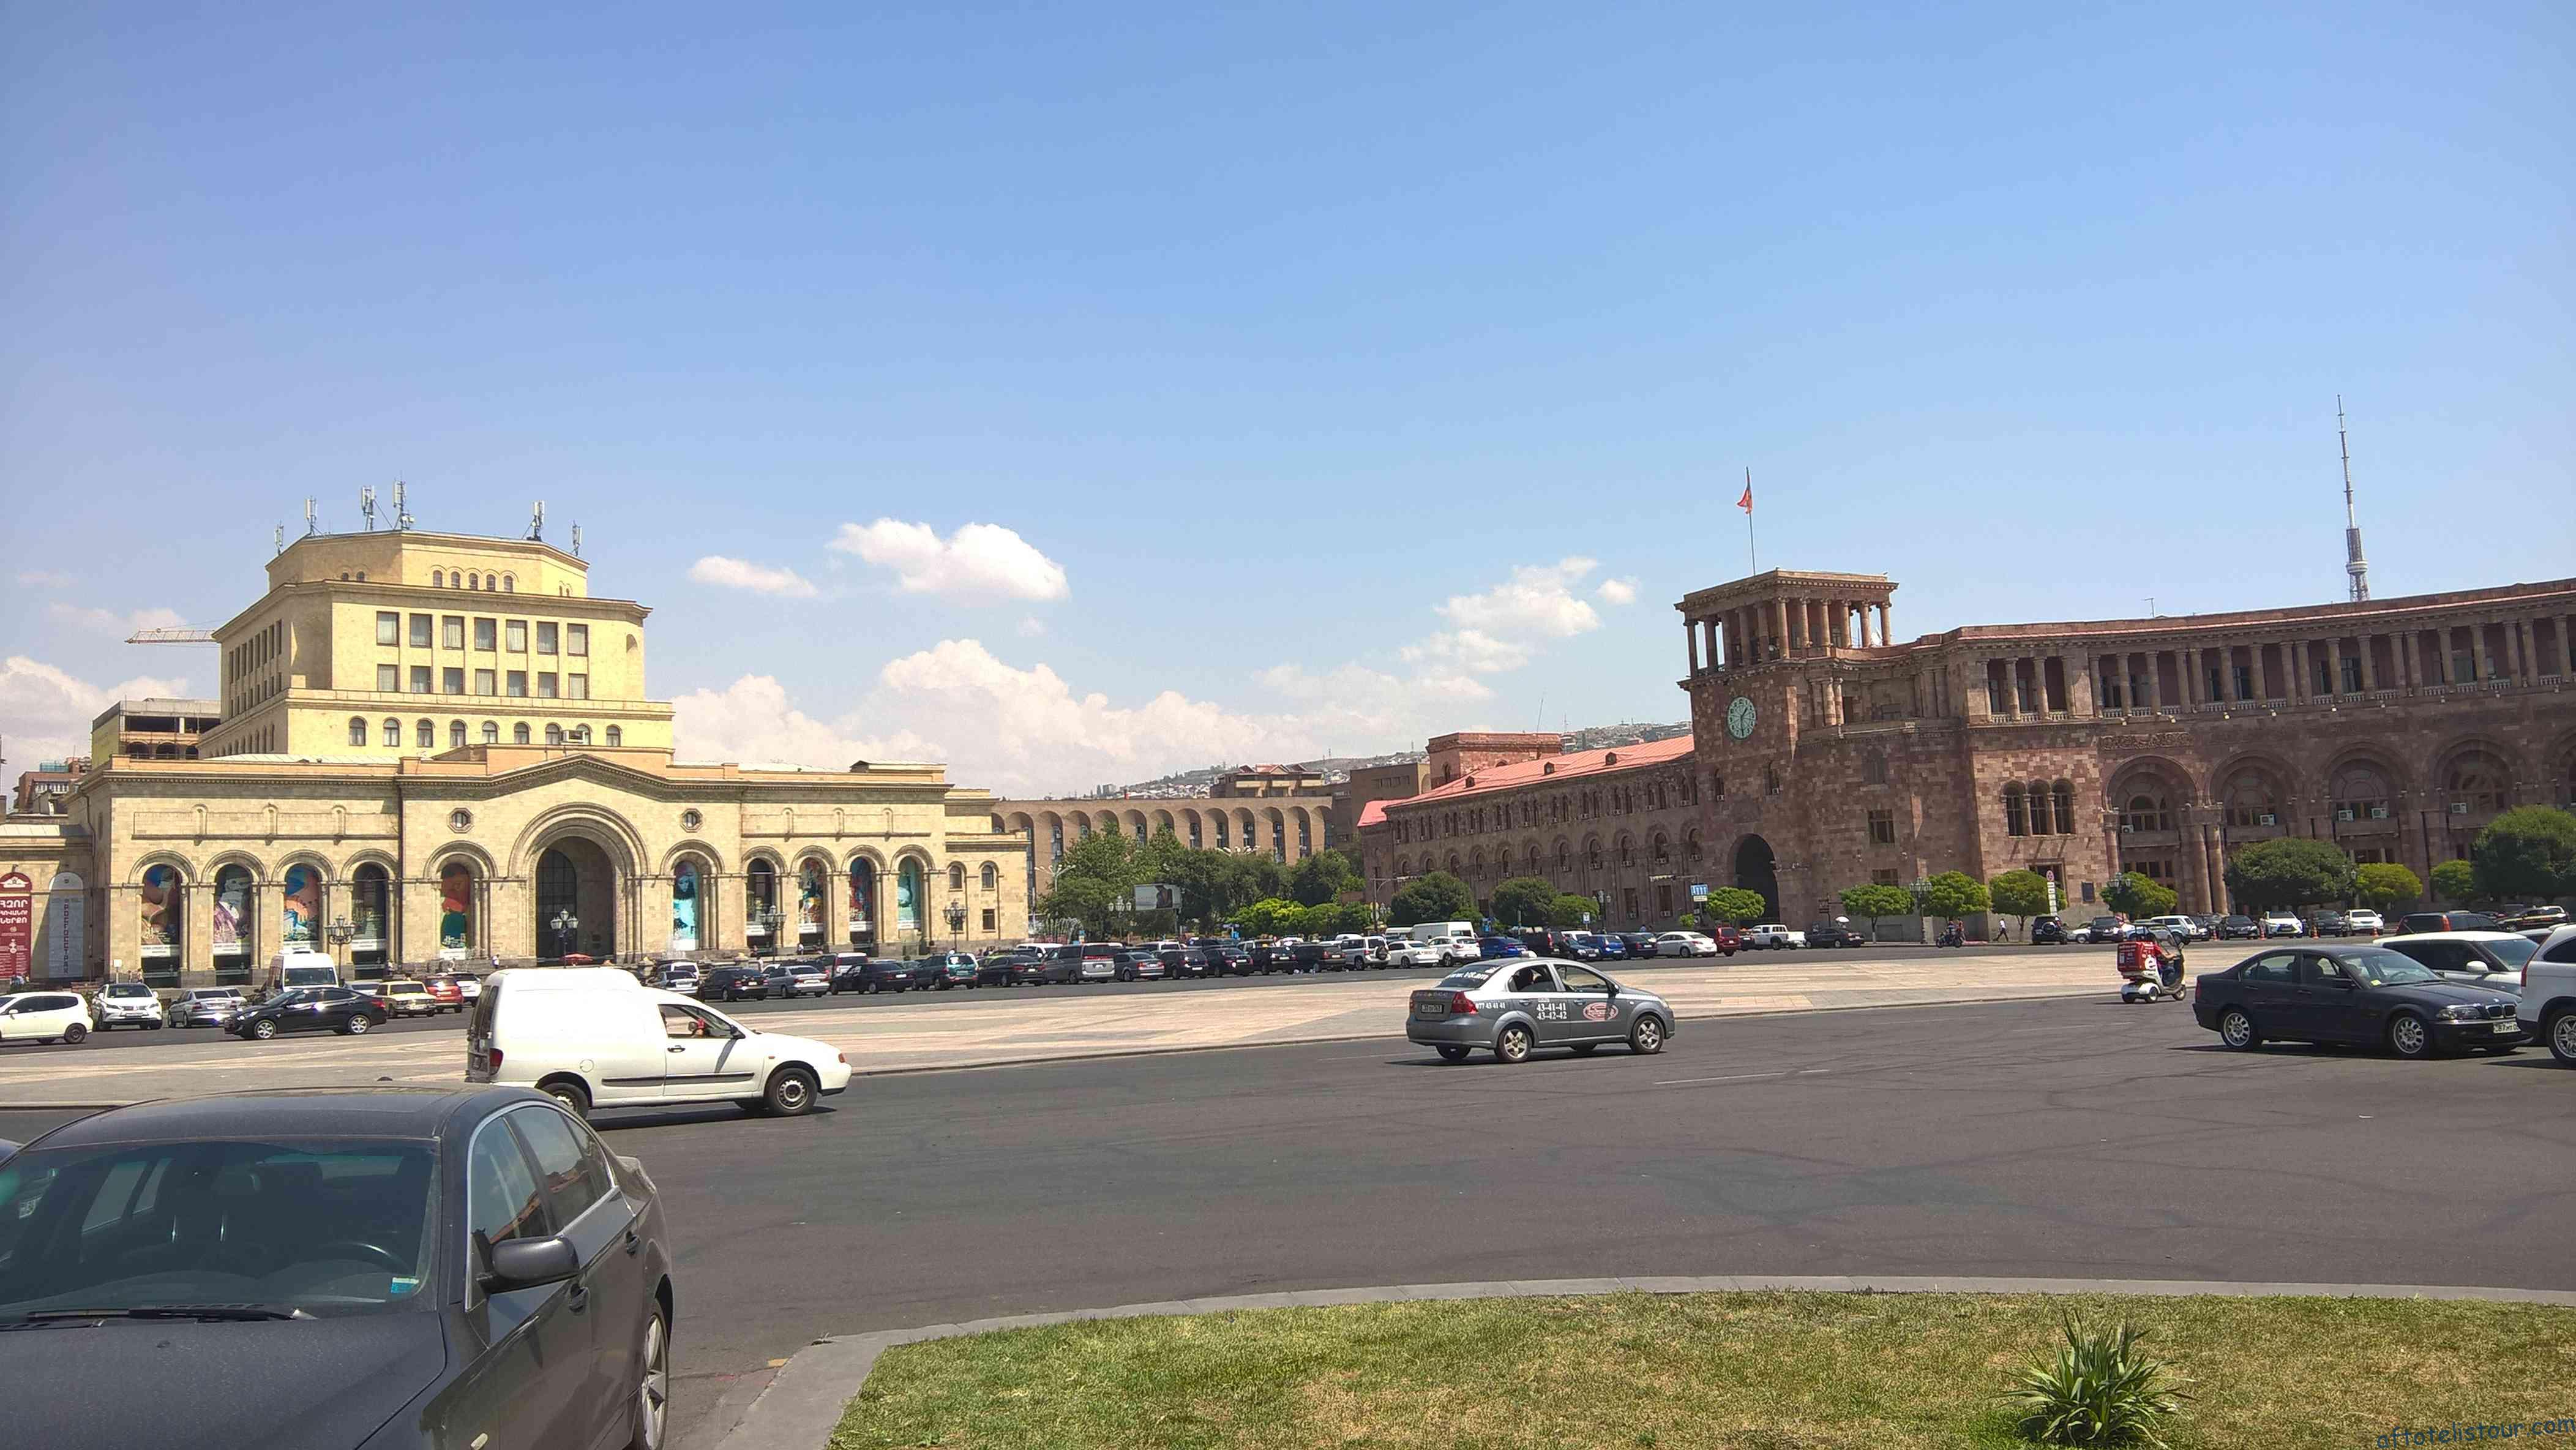 Визит ереван. Ереван Рим. Метро площадь Республики в Ереване. Армения старше Рима. Рим или Ереван.